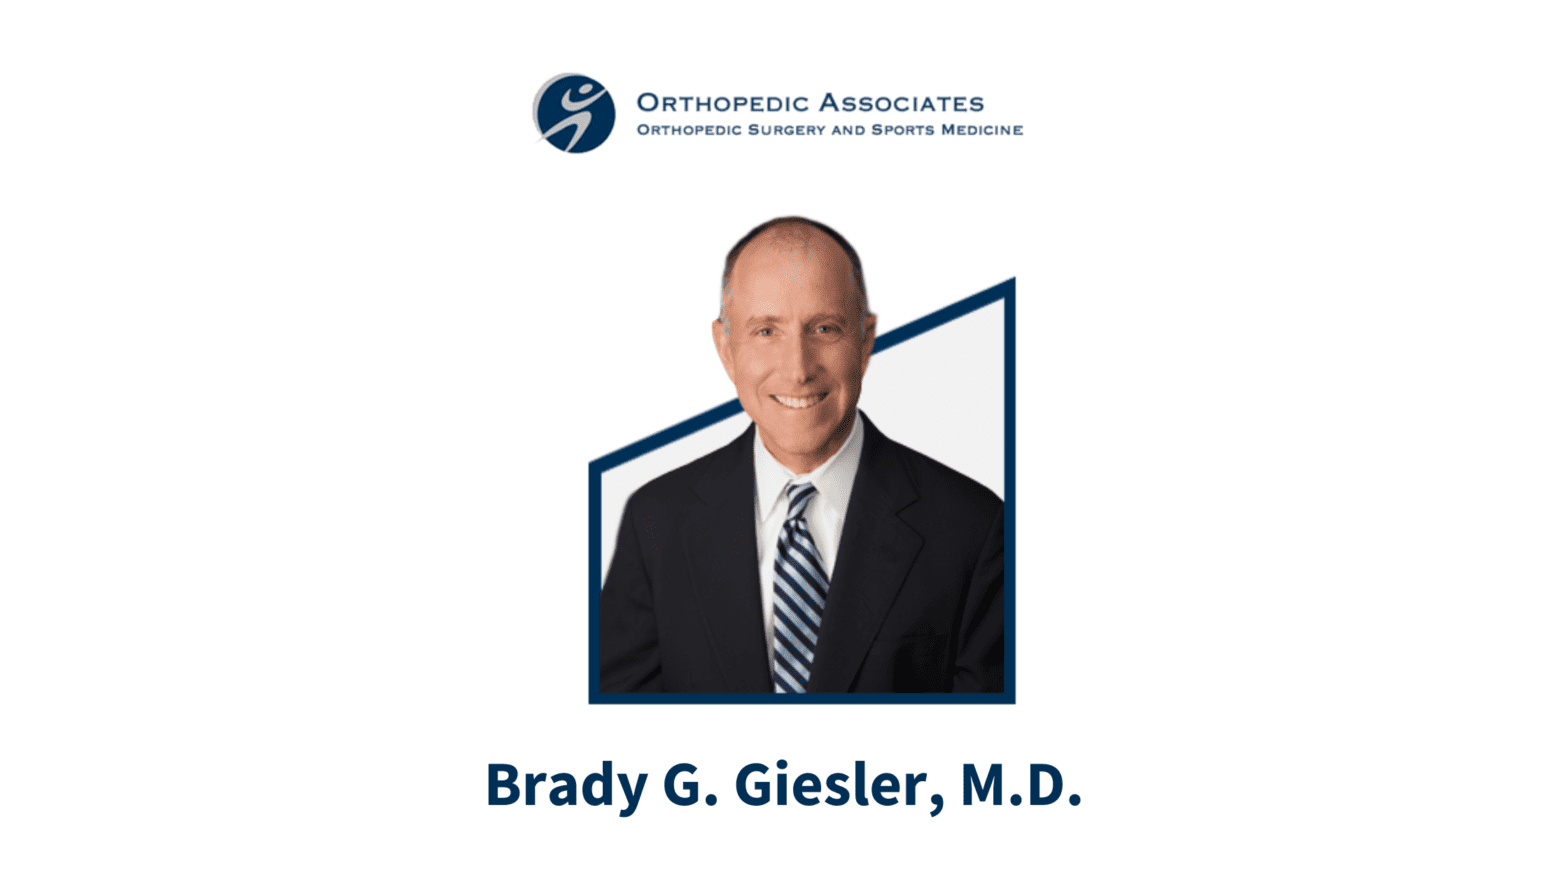 Orthopedic Surgeon: Brady G. Giesler, M.D.